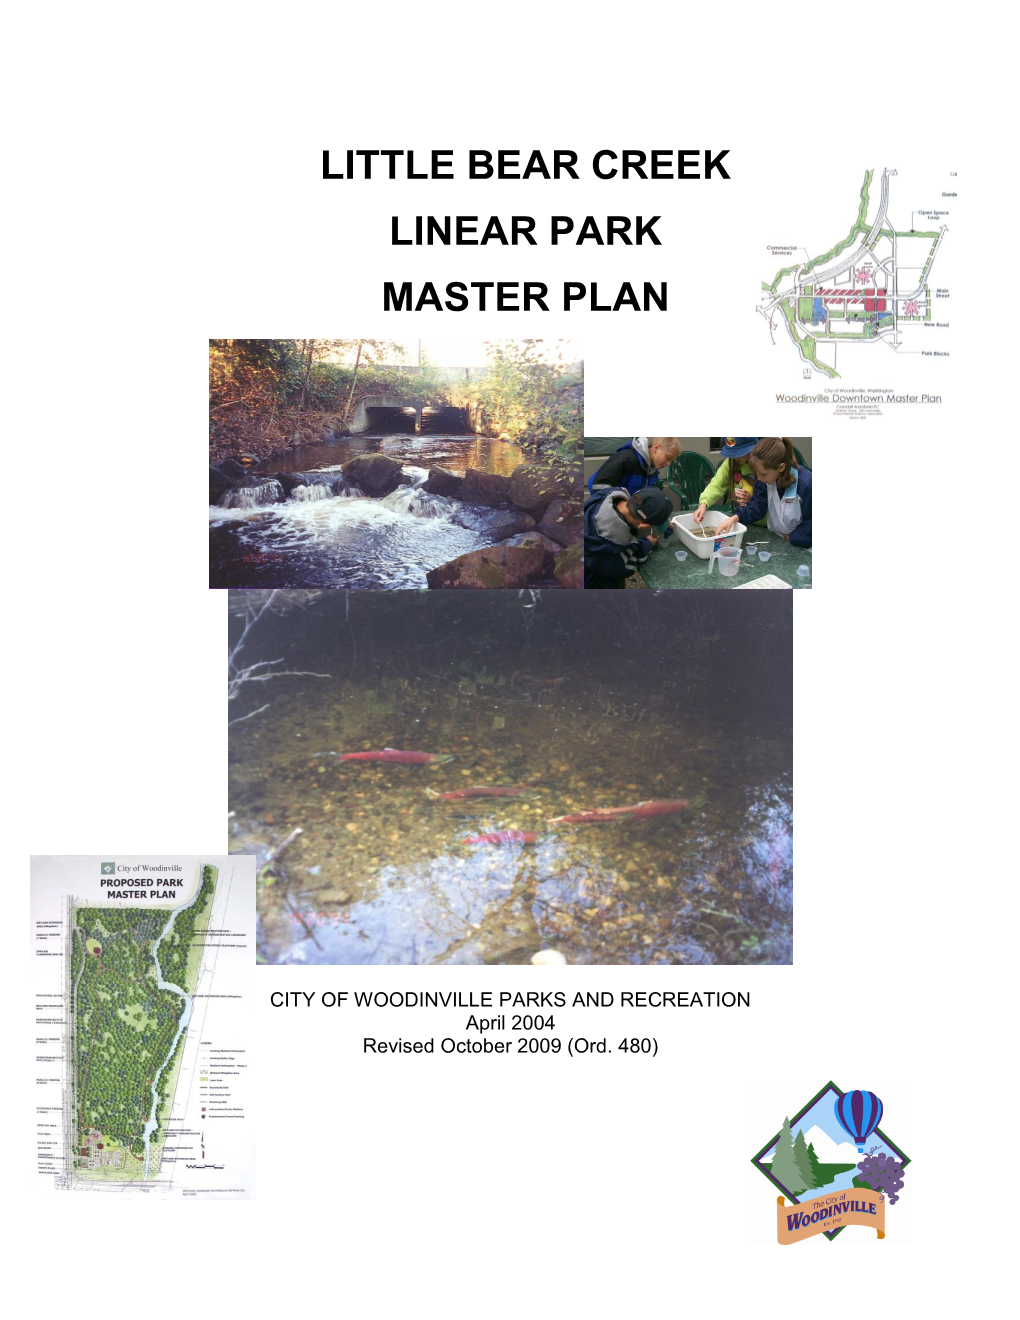 Little Bear Creek Linear Park Master Plan